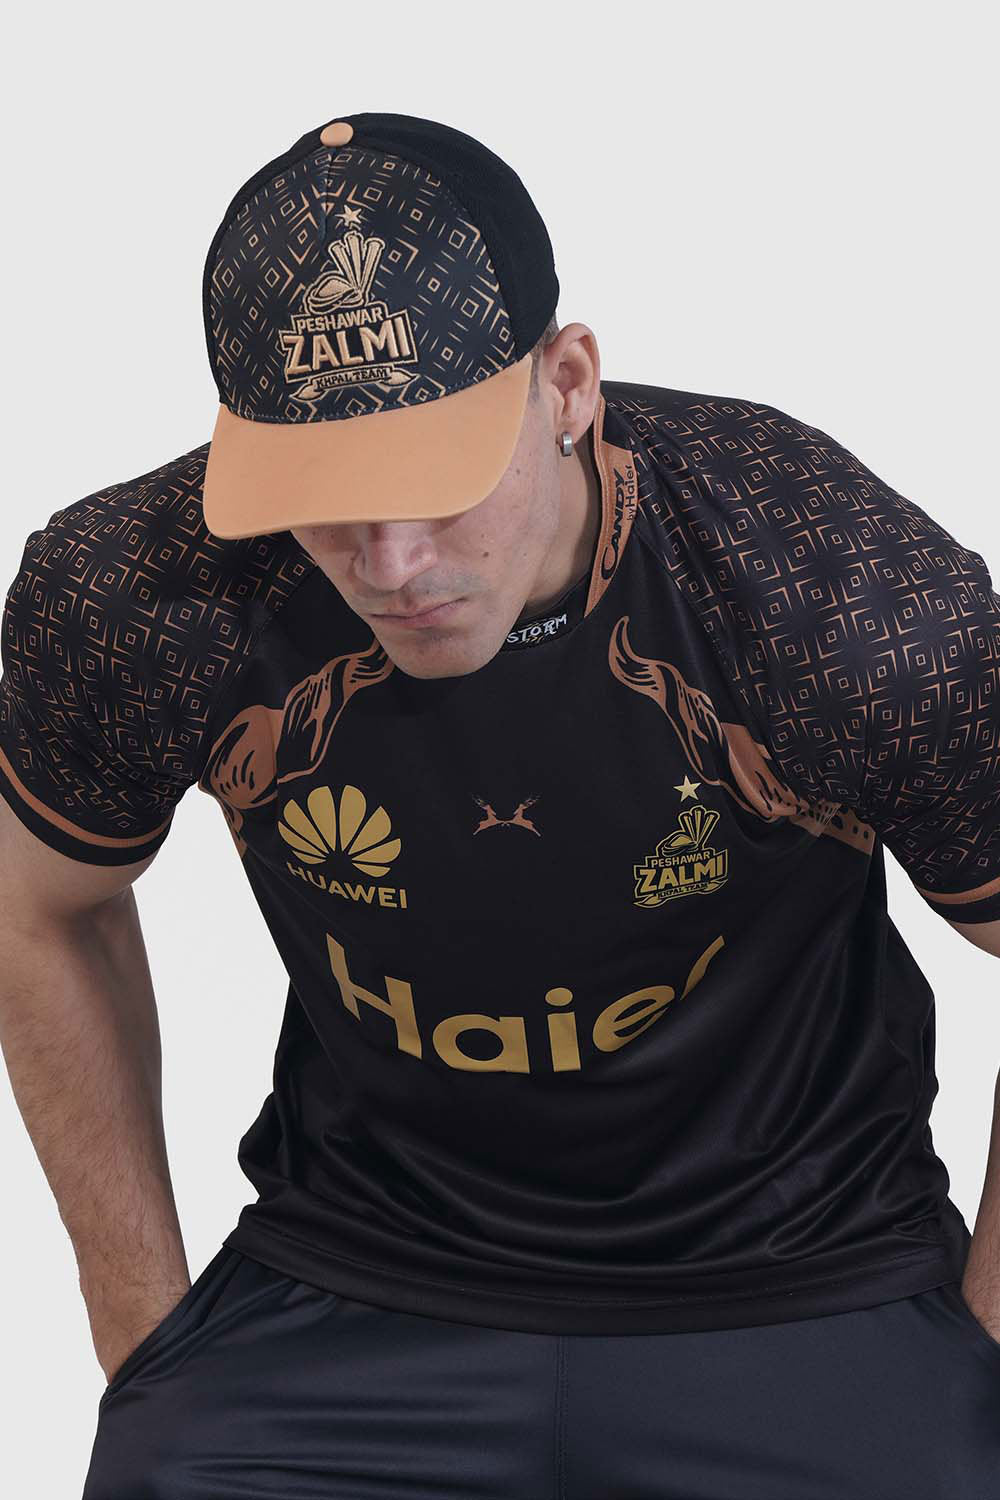 Zalmi Alternate Cap - PSL 8 for Men's Cricket | cricket outfit for men